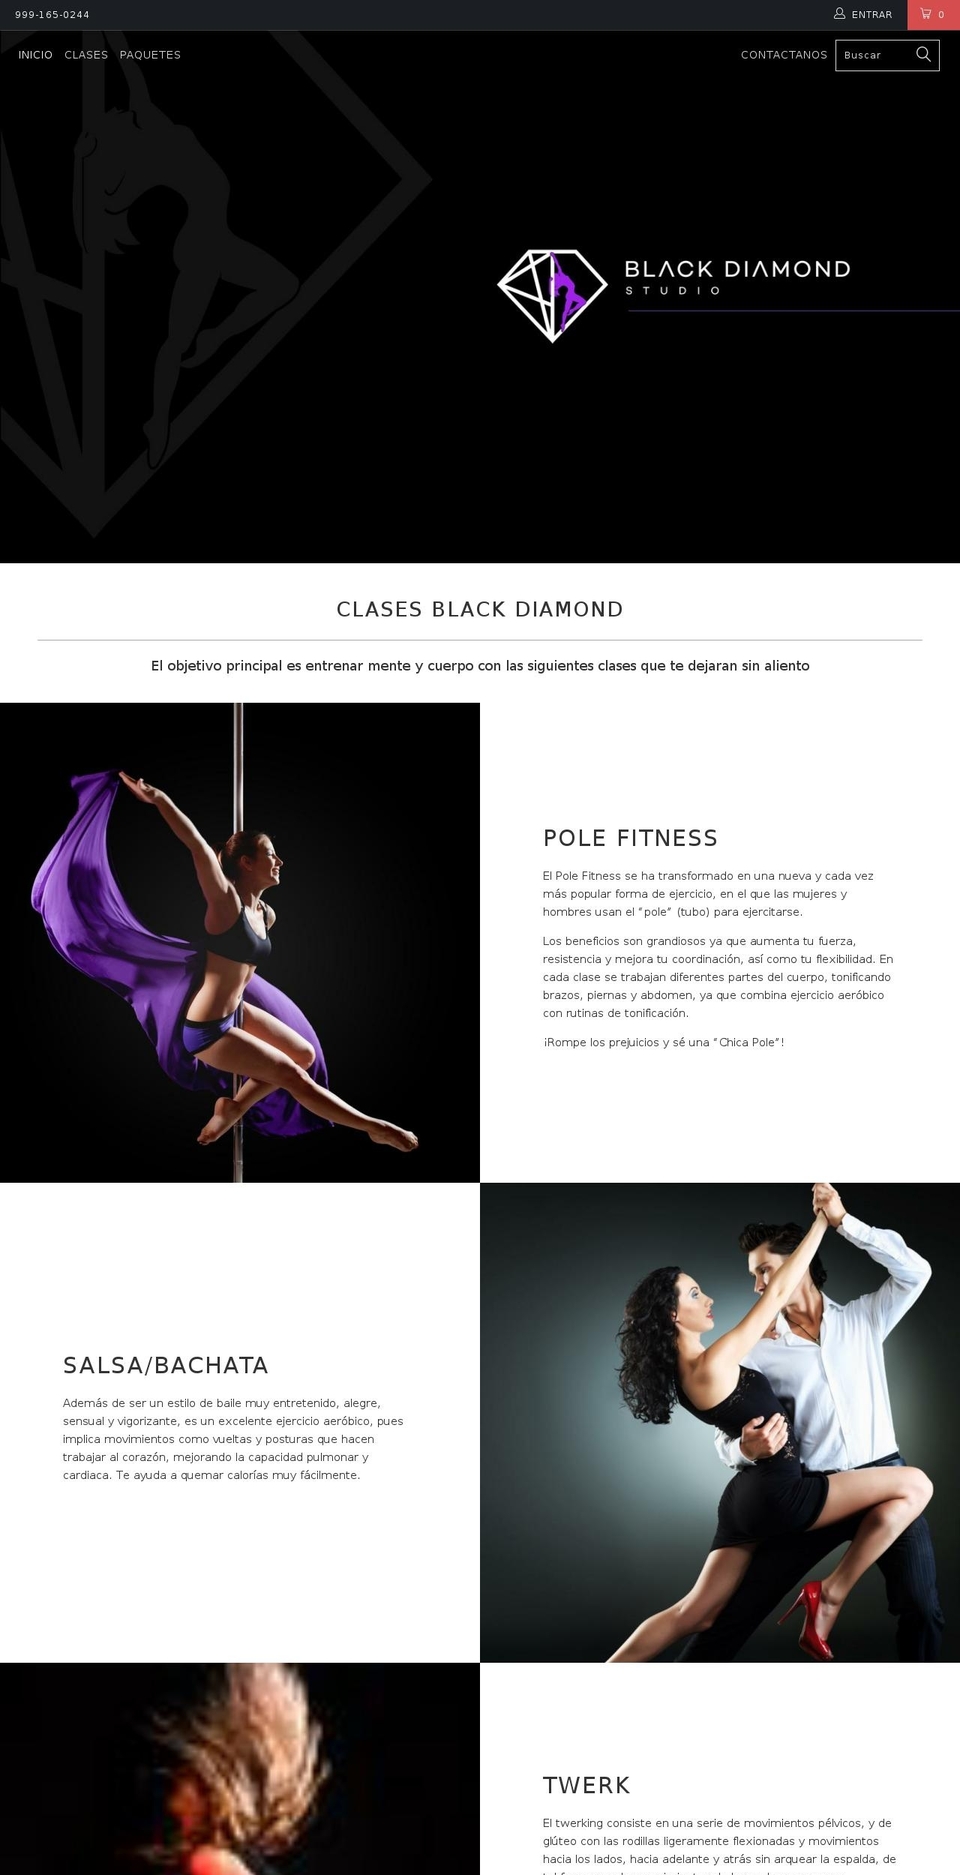 blackdiamond.studio shopify website screenshot